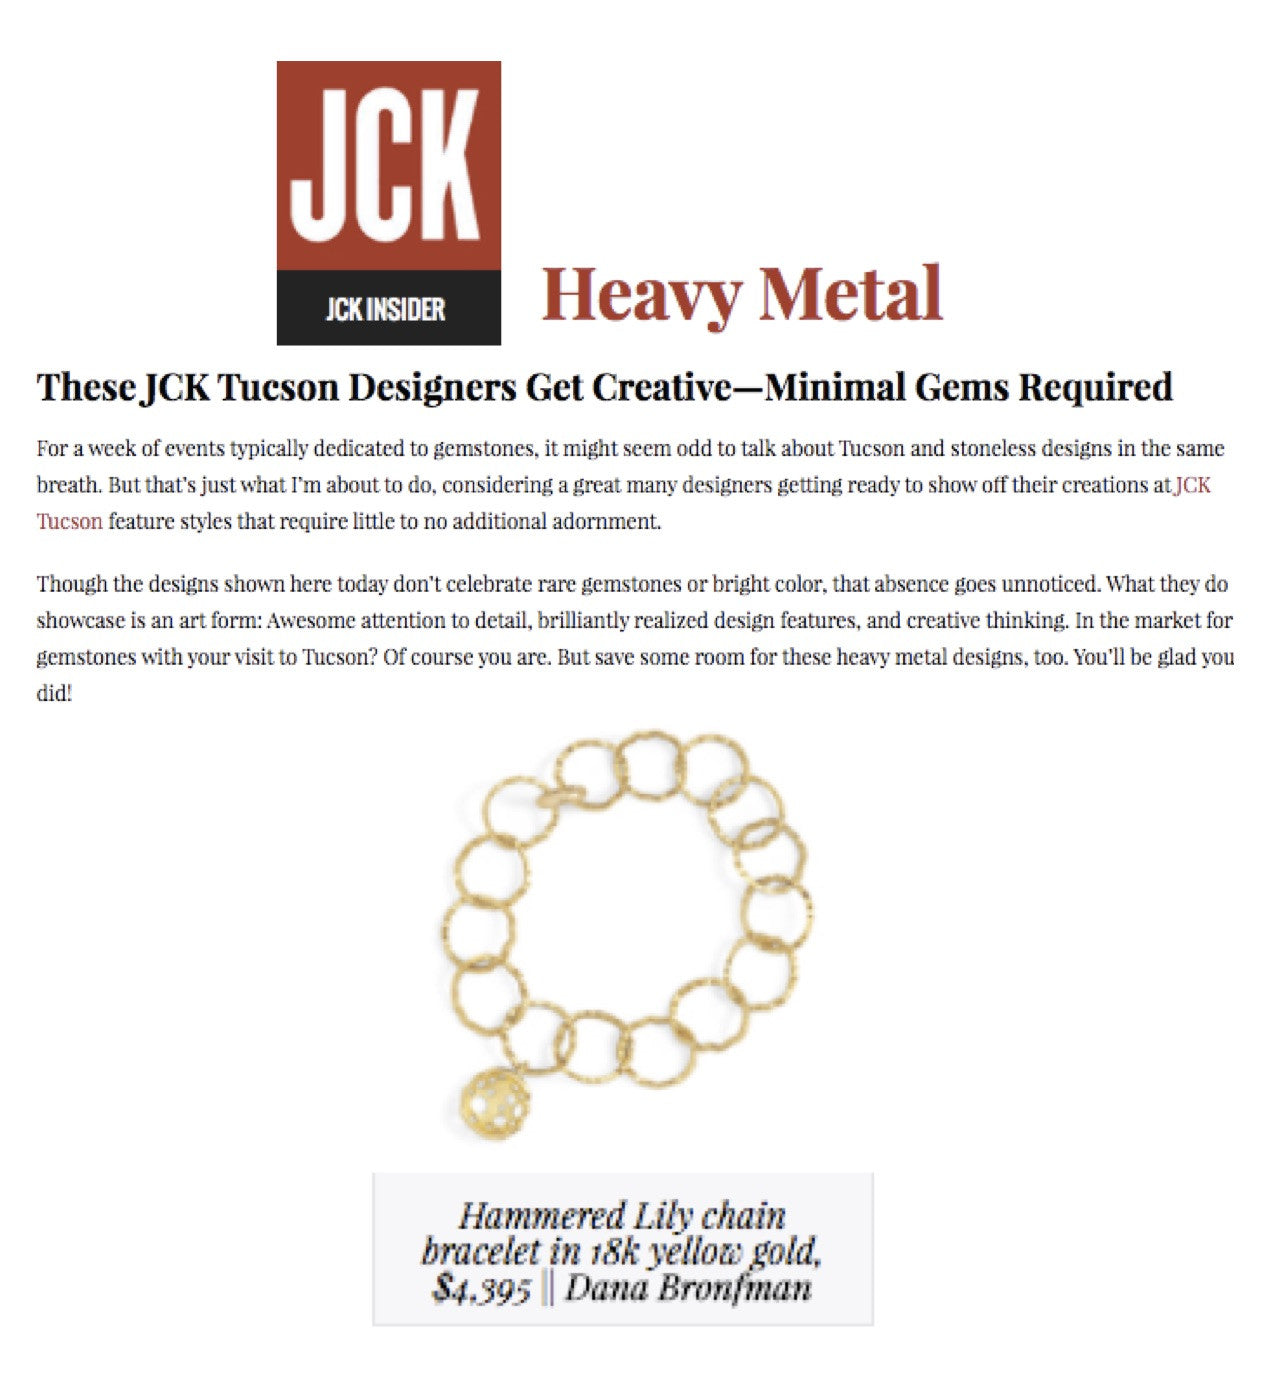 Hammered Lily Chain Bracelet featured on JCK Insider